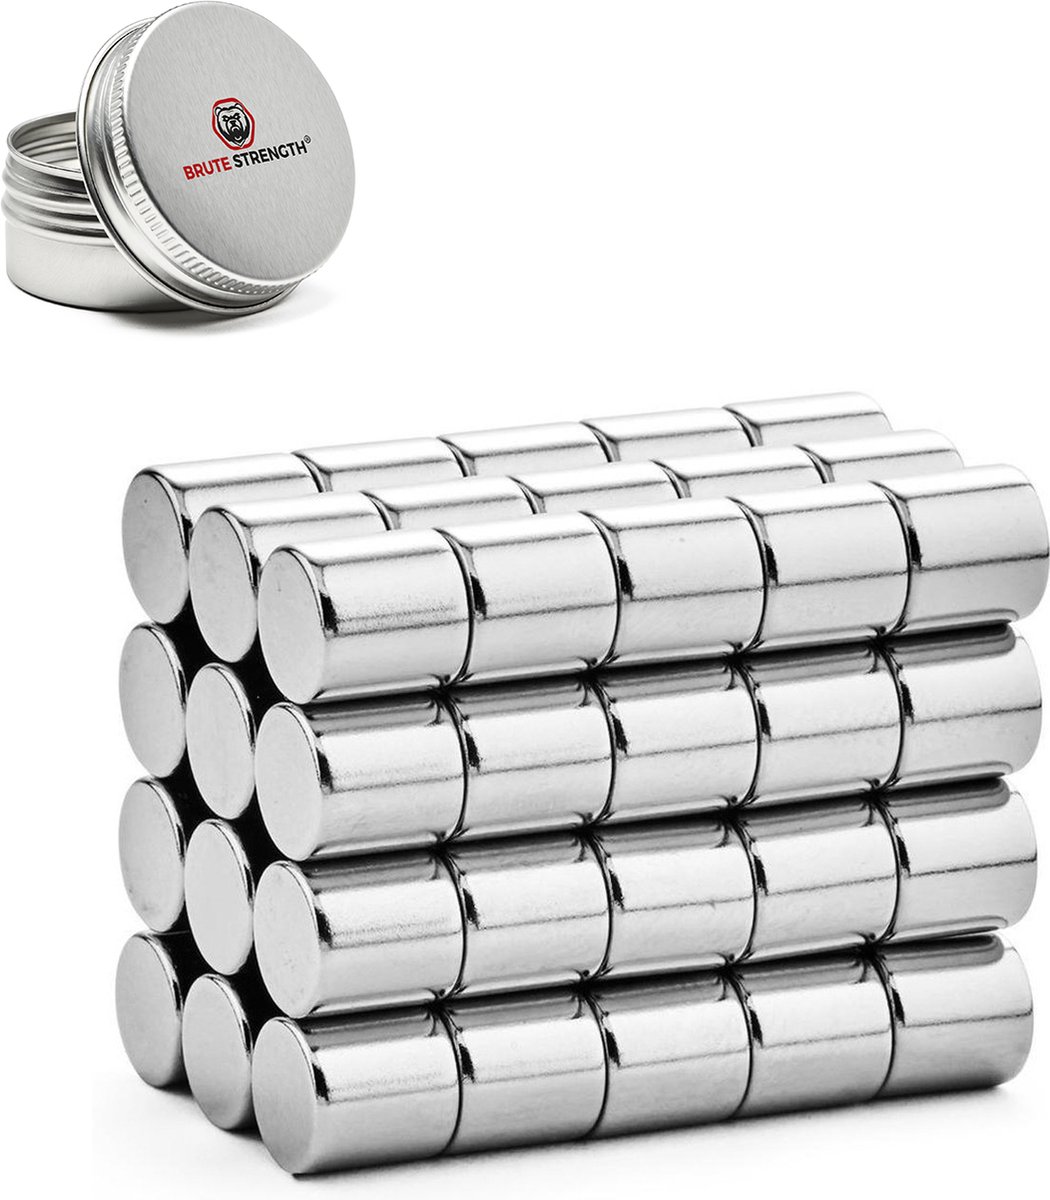 Brute Strength - Super sterke magneten - Rond - 10 x 10 mm - 60 stuks - Neodymium magneet sterk - Neodymium magneet sterk - Voor koelkast - whiteboard